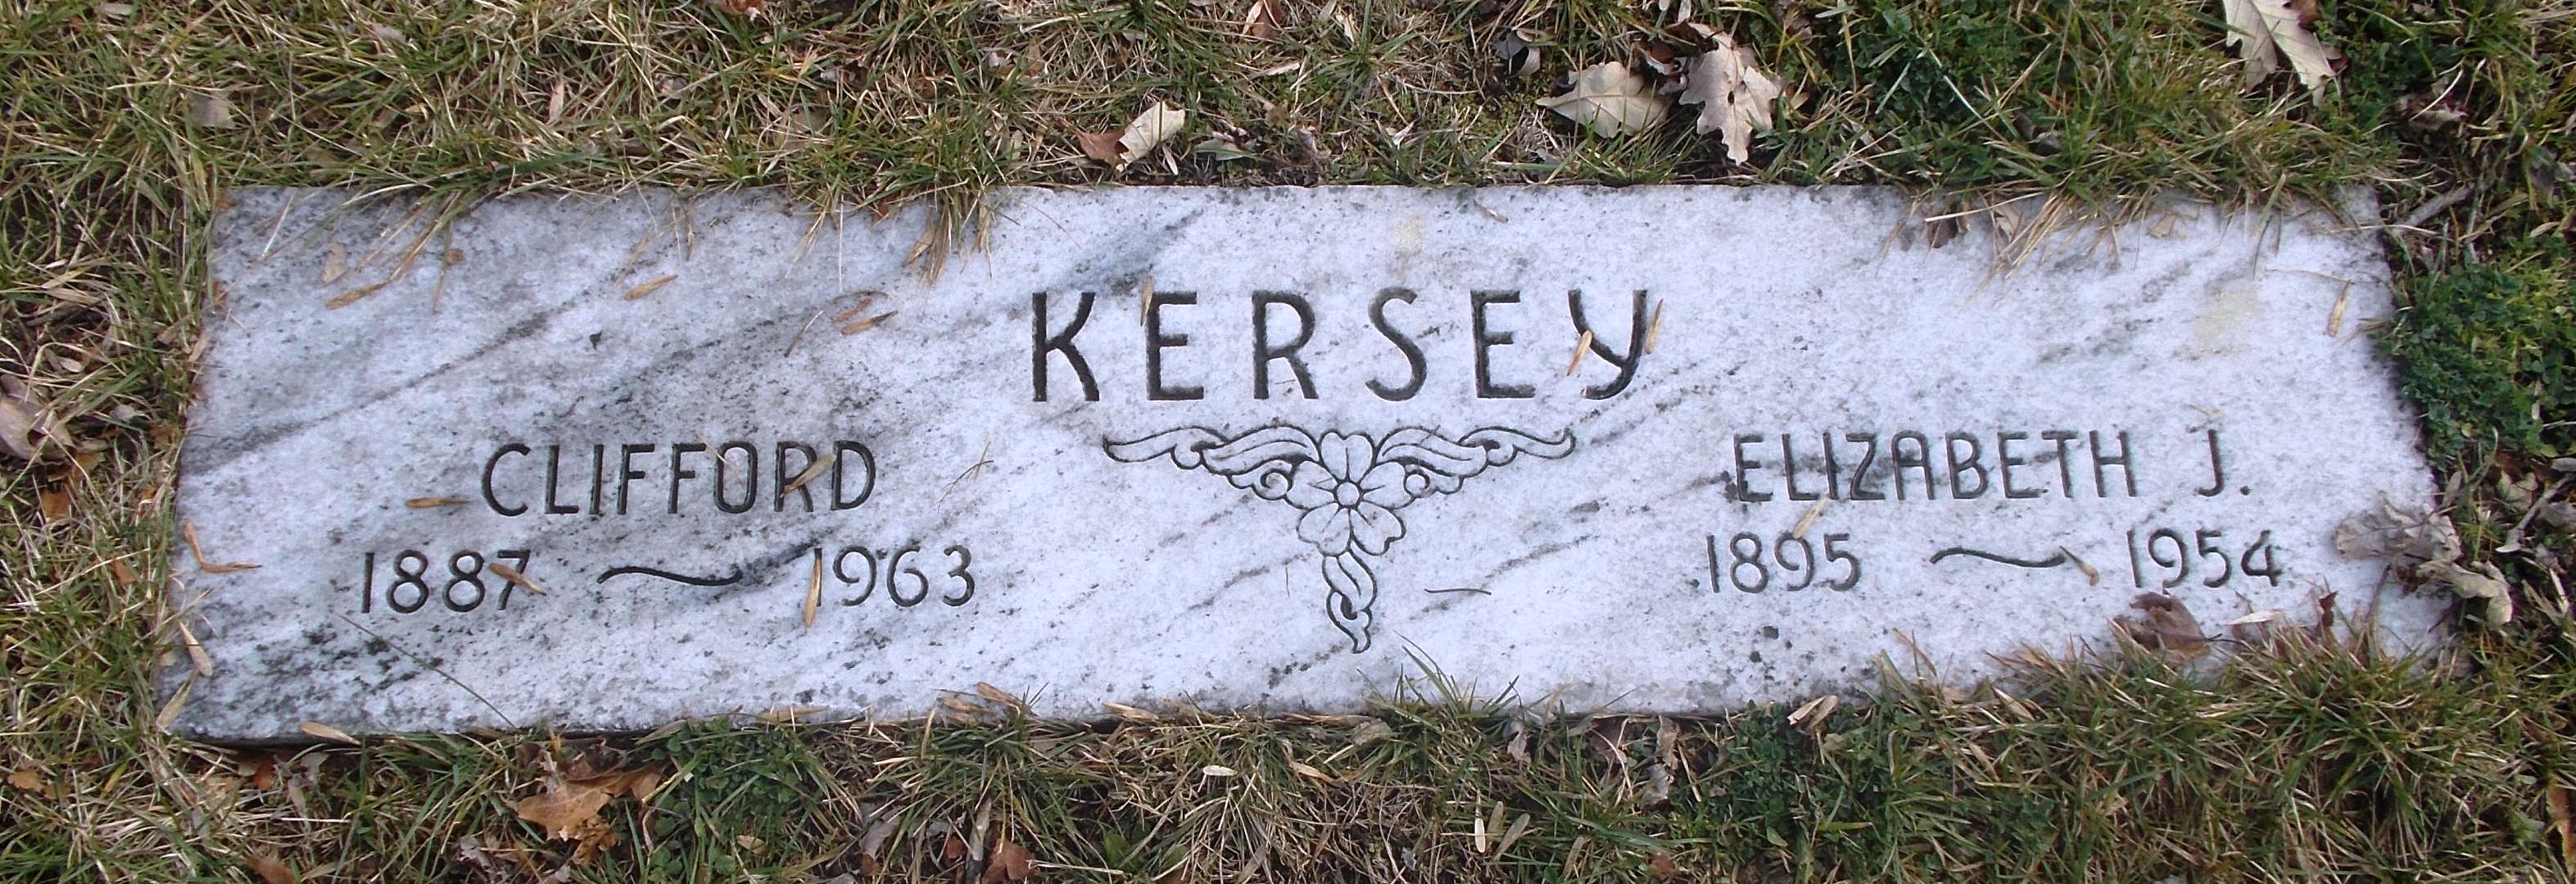 Clifford Kersey